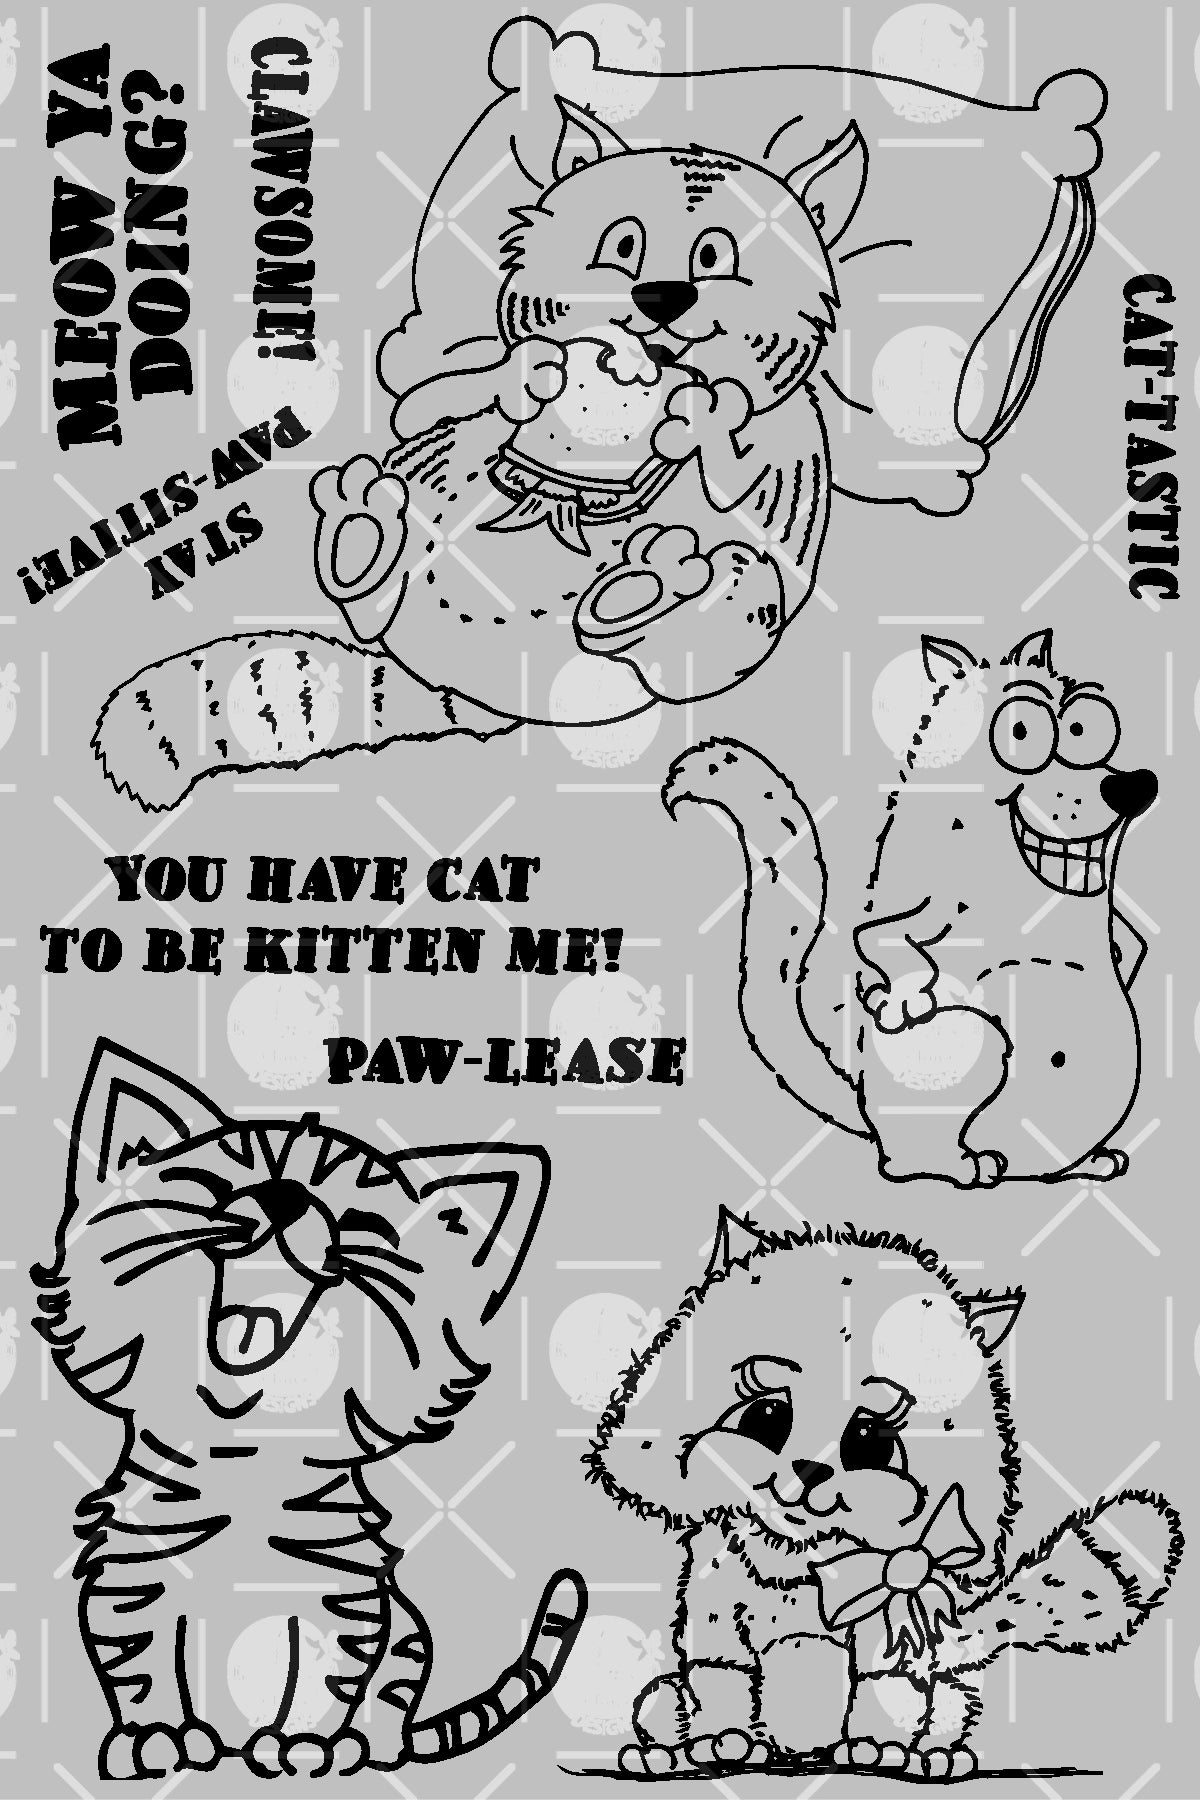 Cutie Meow Pre Ink Stamp / “可爱喵咪” 印章 / Cop Kucing Comel/ Pra-Dakwat Cop